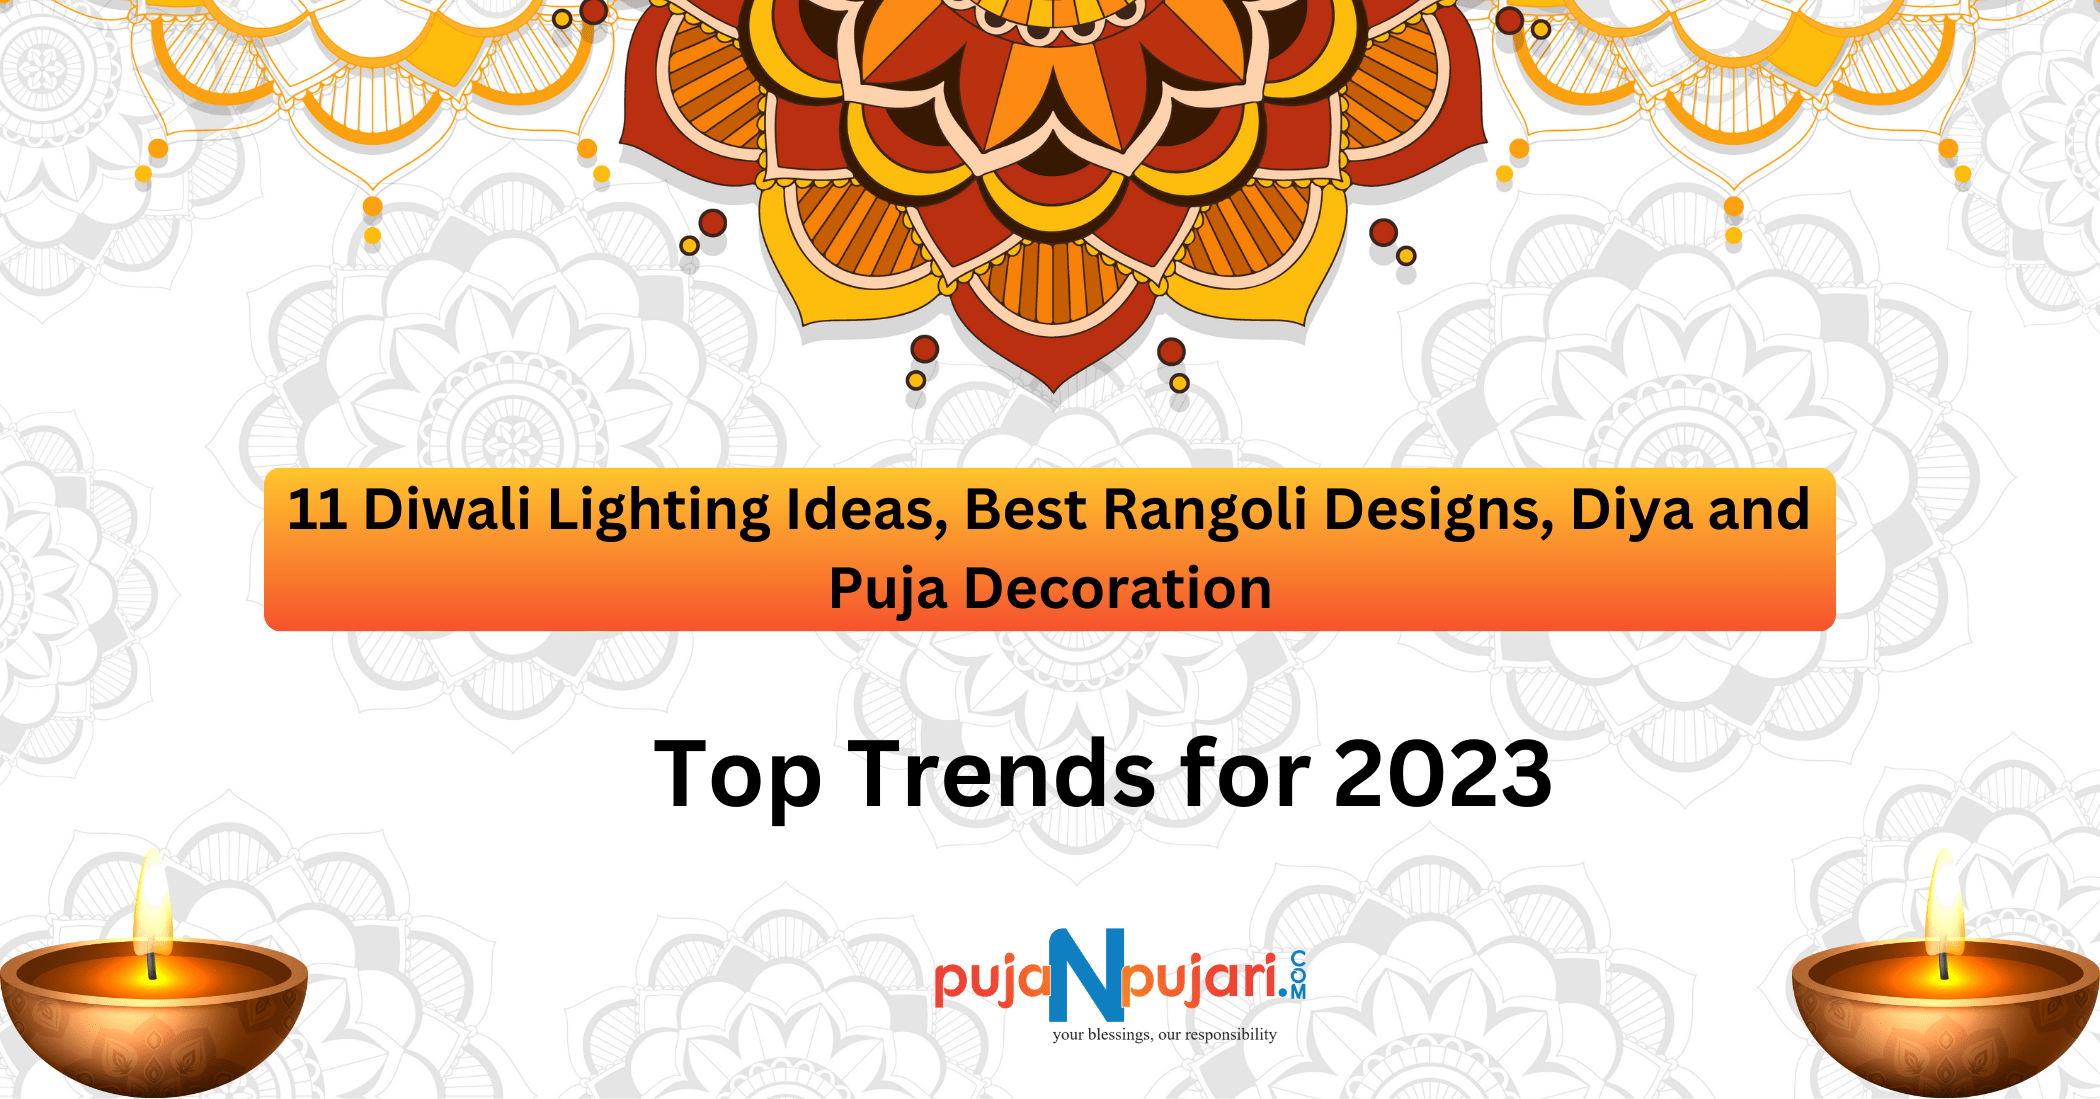 11 Diwali Lighting Ideas, Best Rangoli Designs, Diya and Puja Decoration - Top Trends for 2023